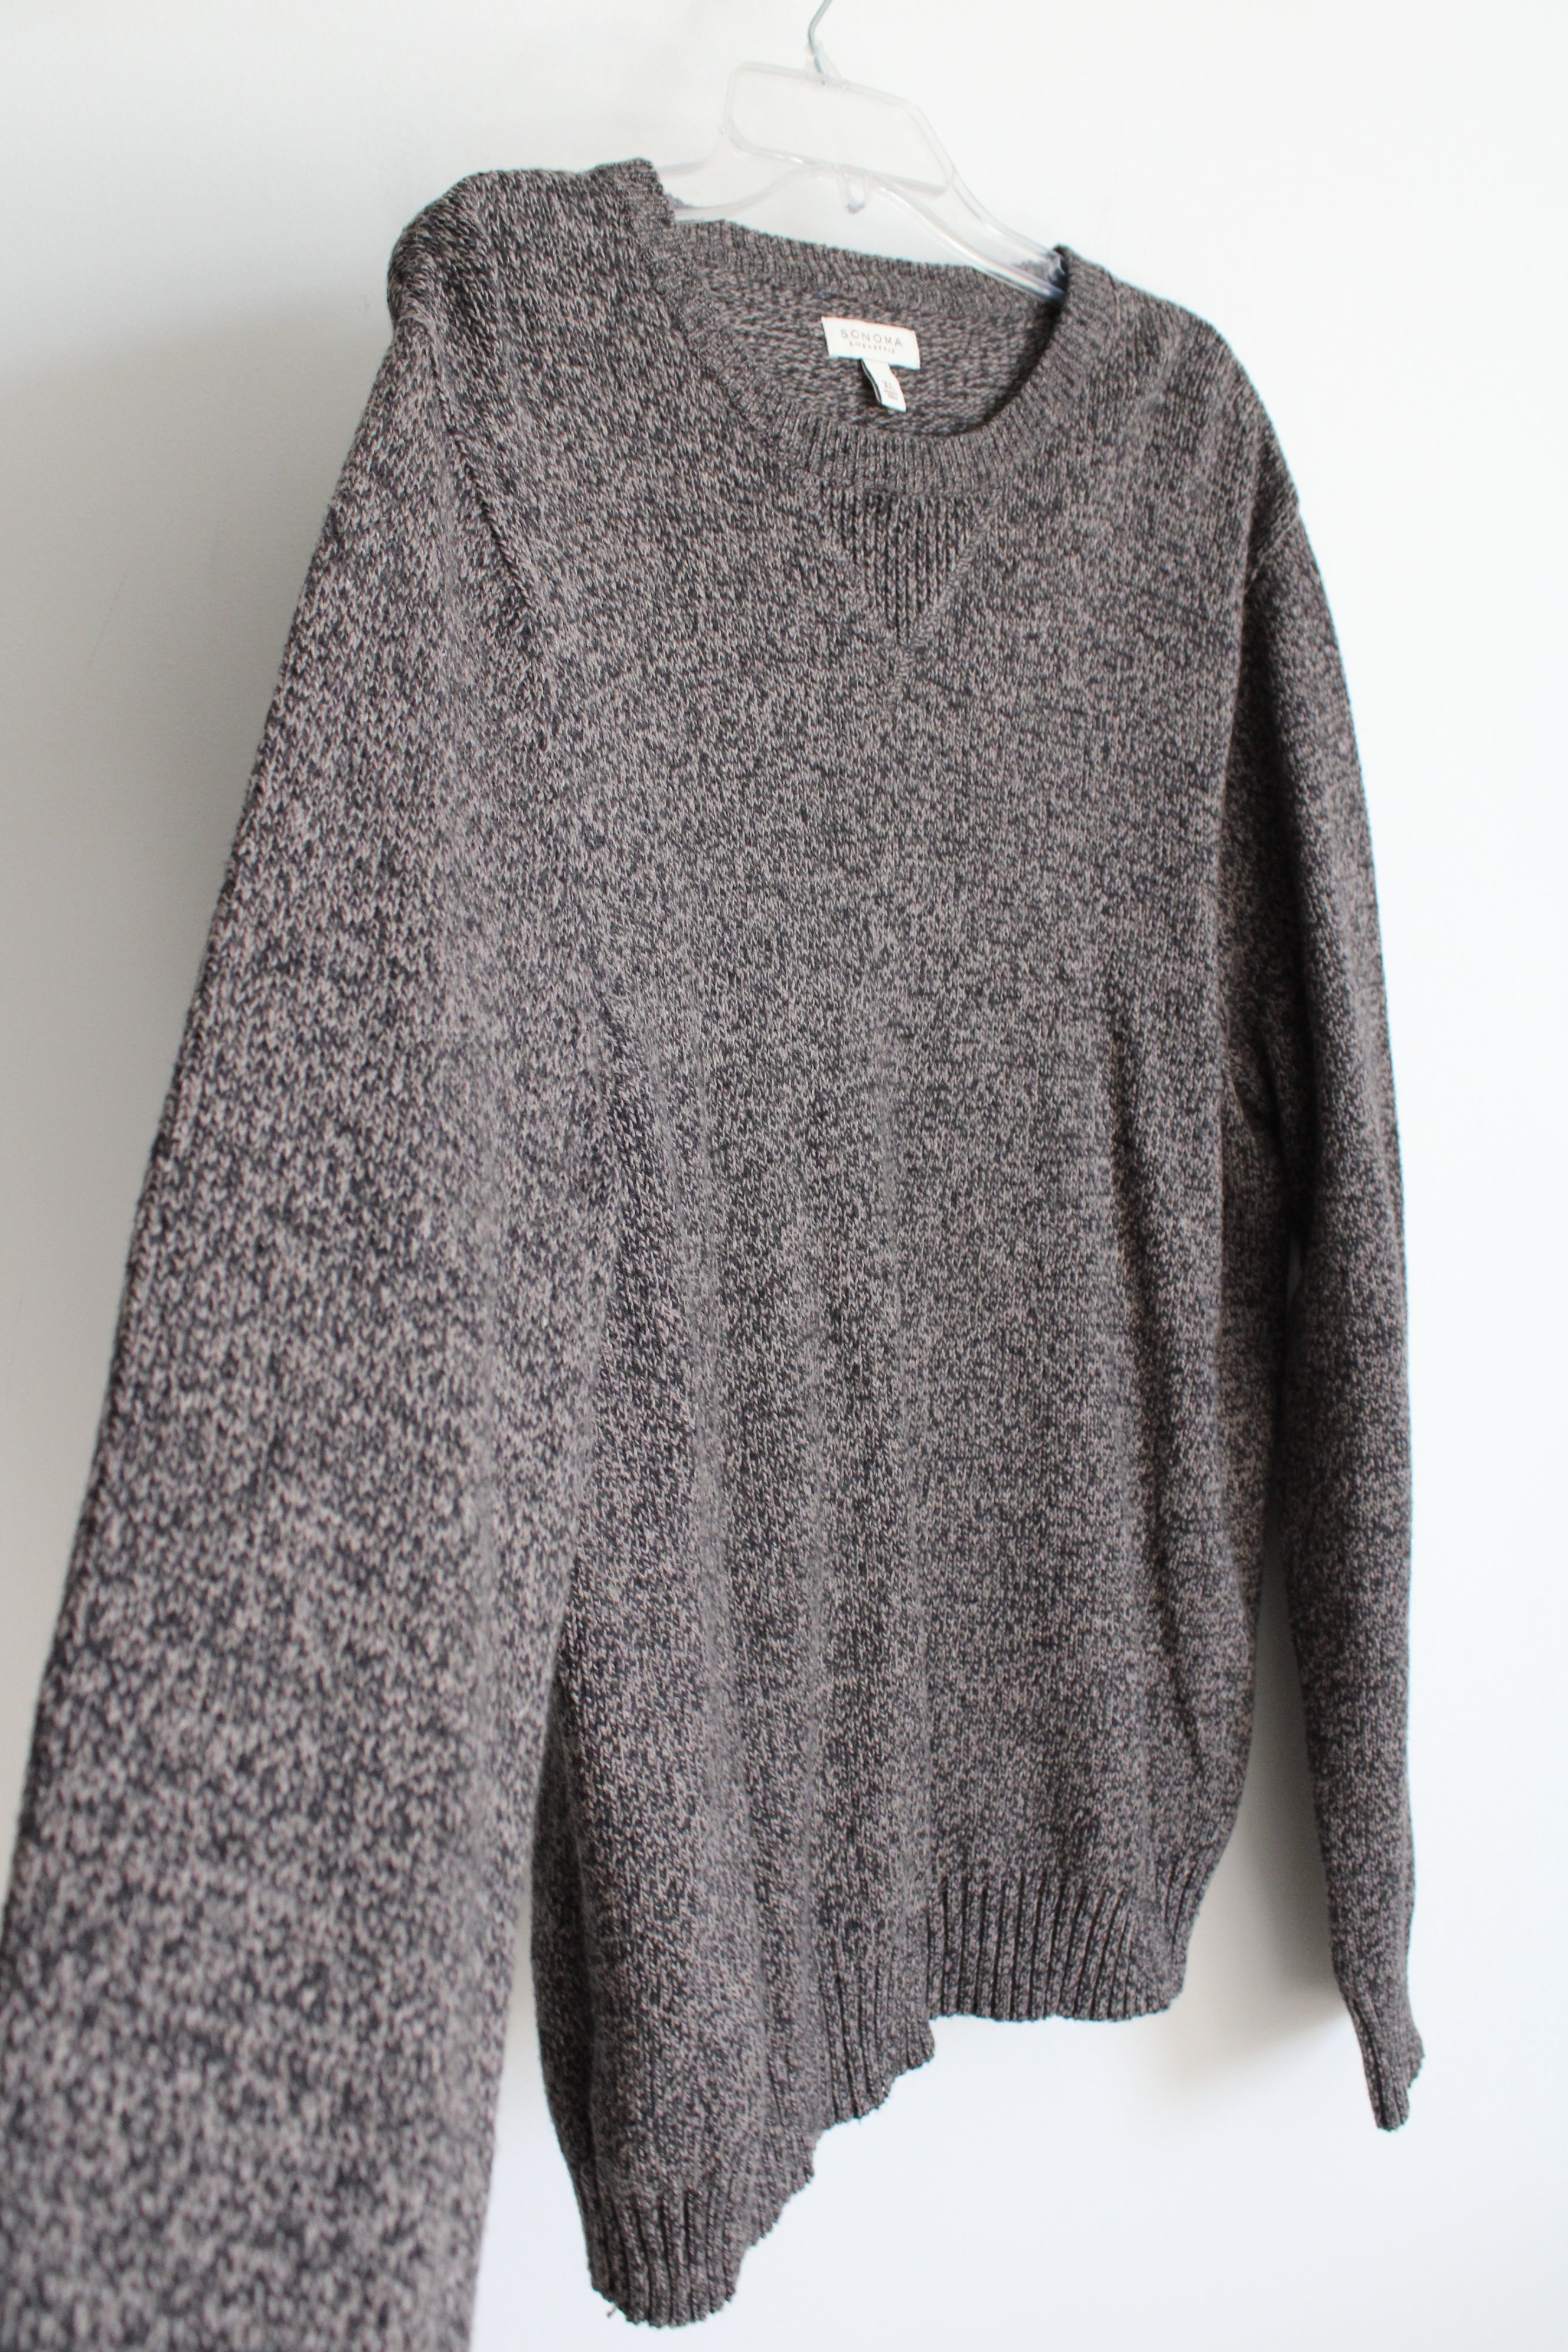 Sonoma Gray Knit Sweater | XL